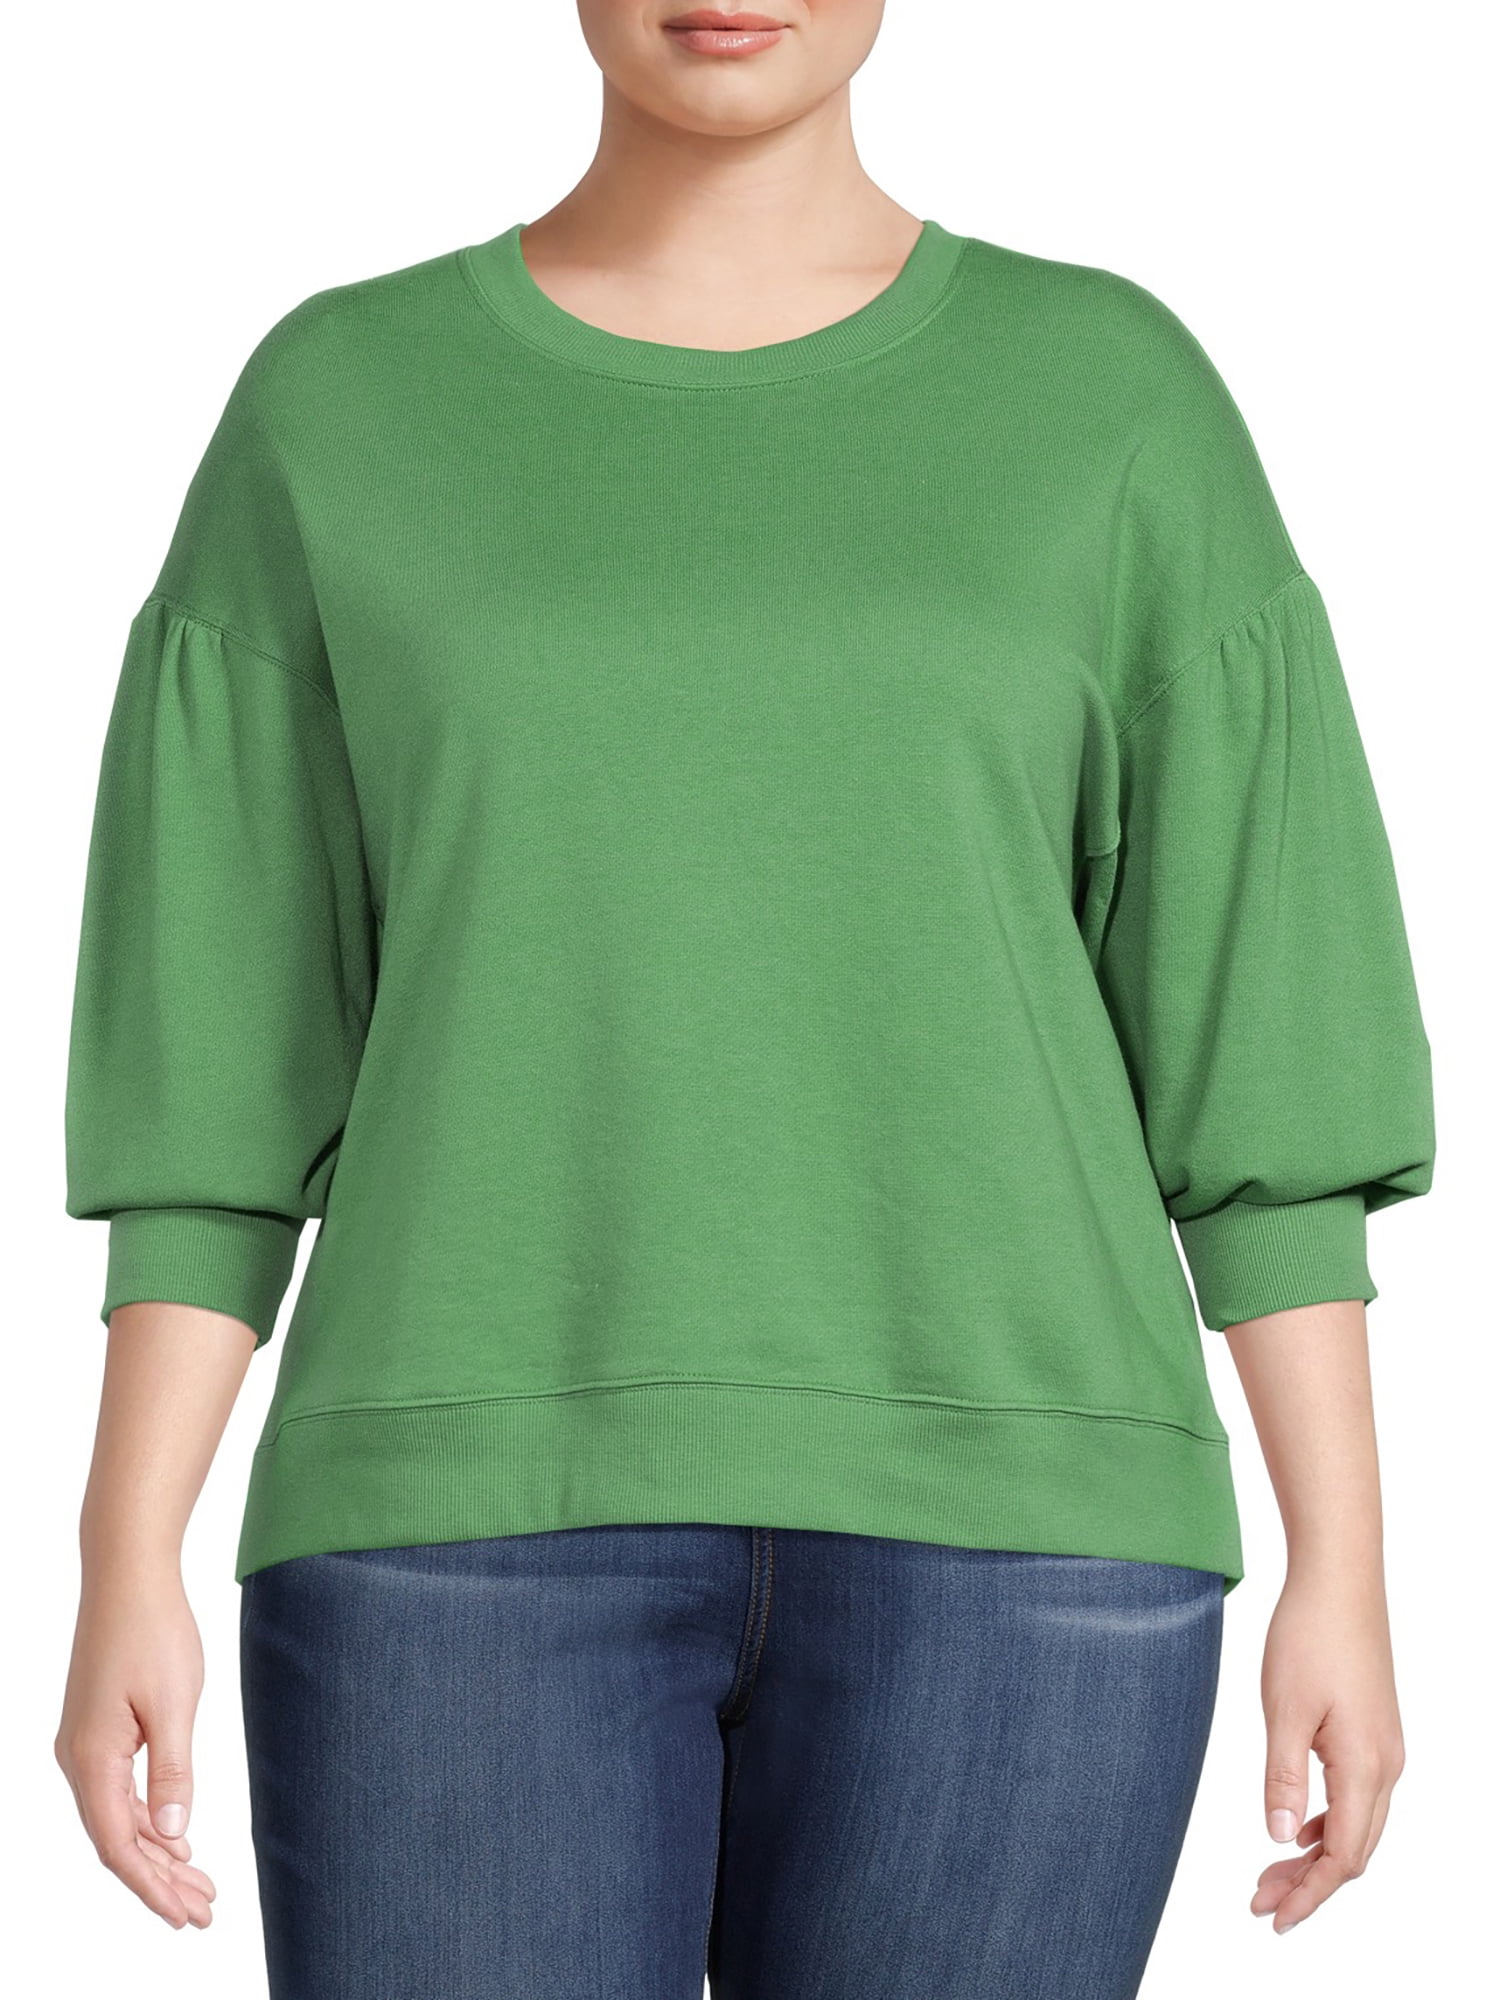 Terra & Sky Women's Plus Size Puff Sleeve Sweatshirt - Walmart.com